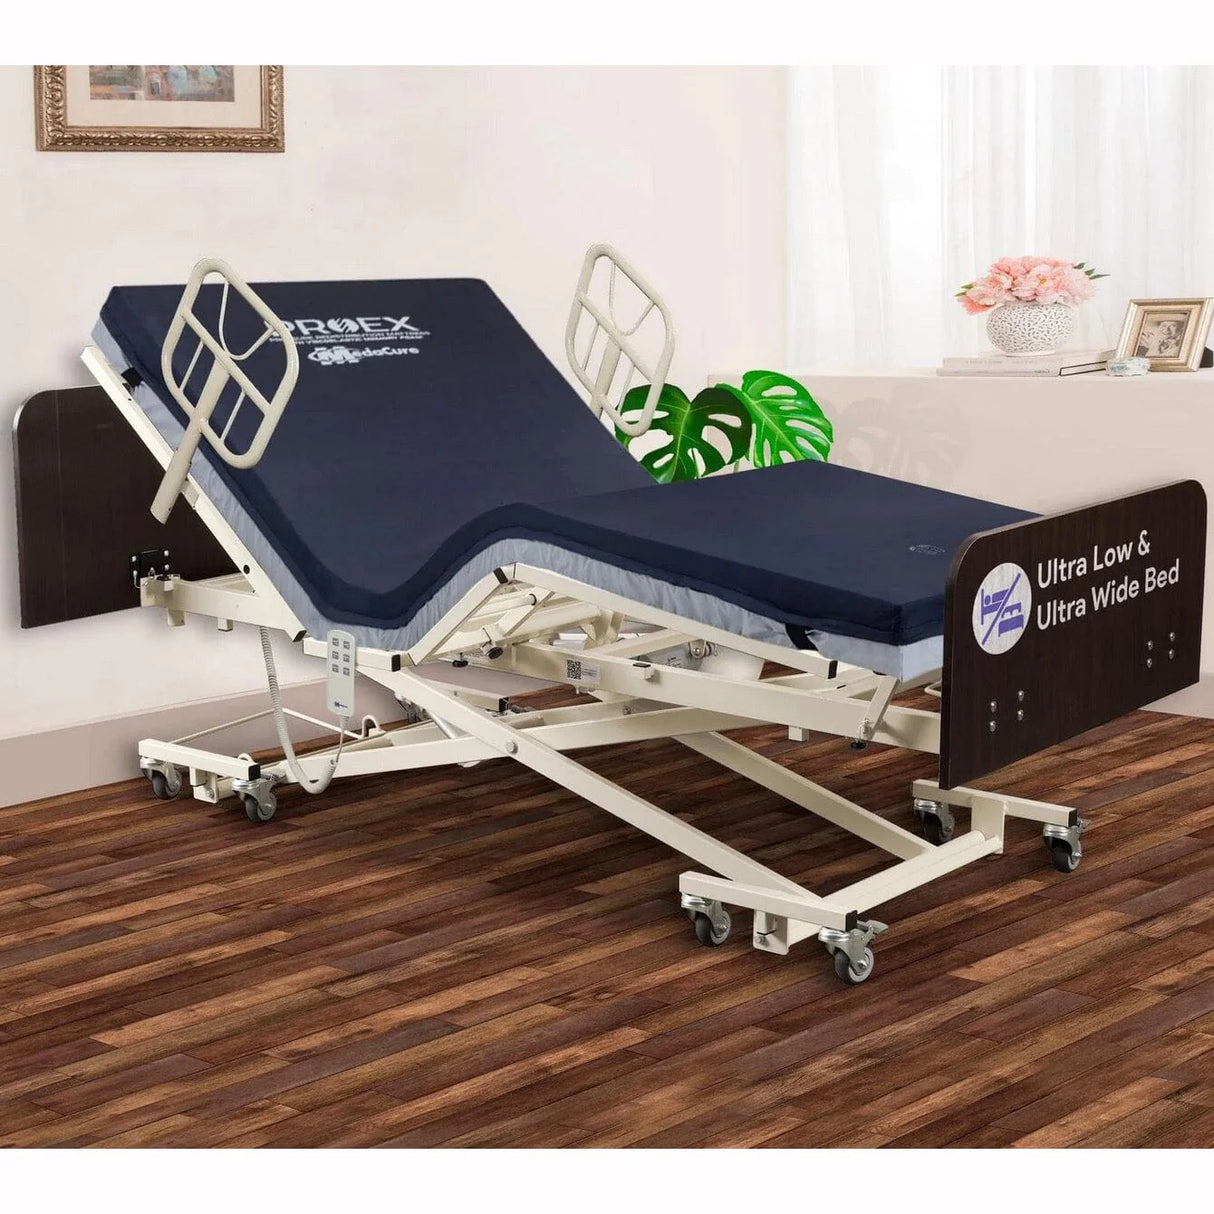 MedaCure Ultra Low Hi-Low Hospital Bed